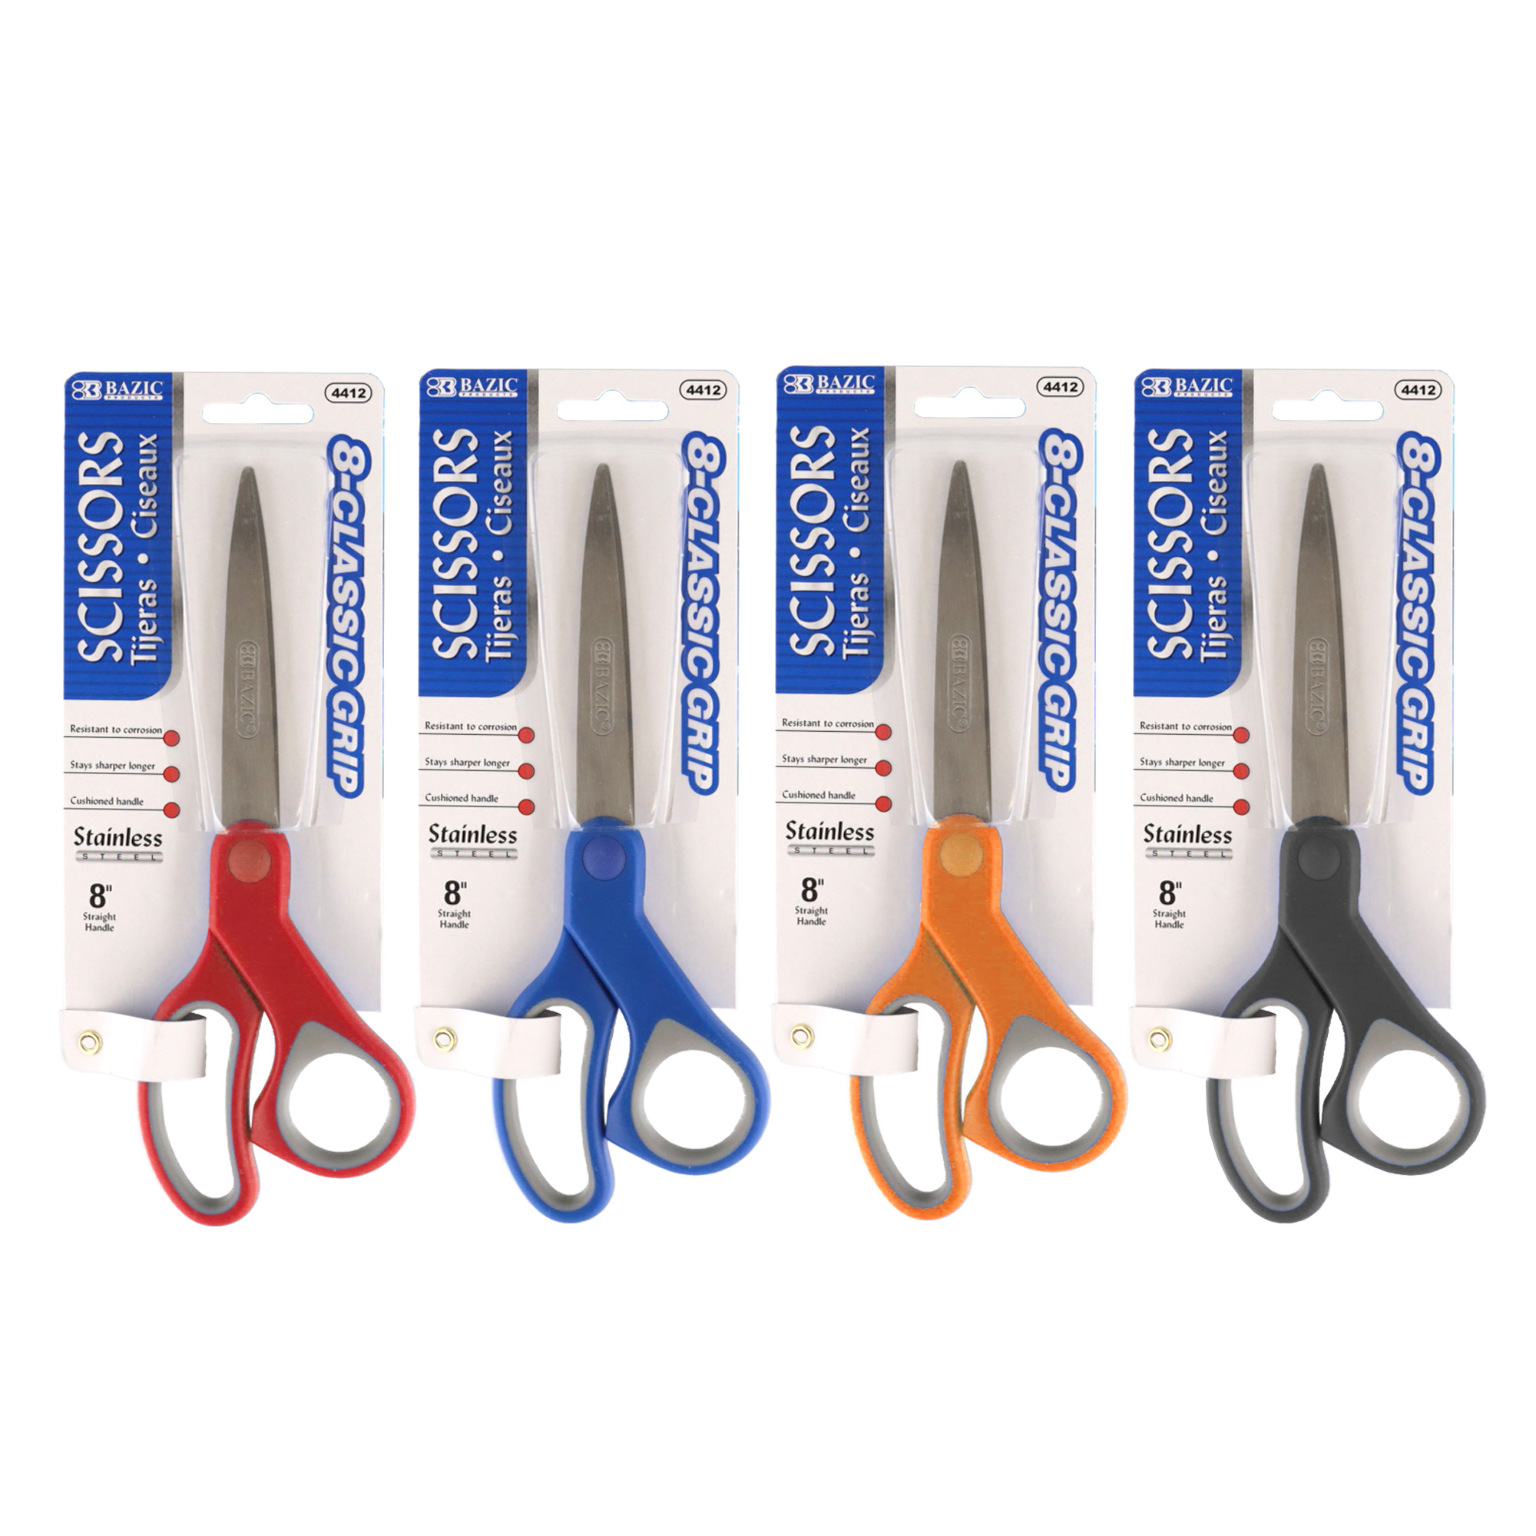 All Purpose Scissors - Assorted Colors, Comfort Grip